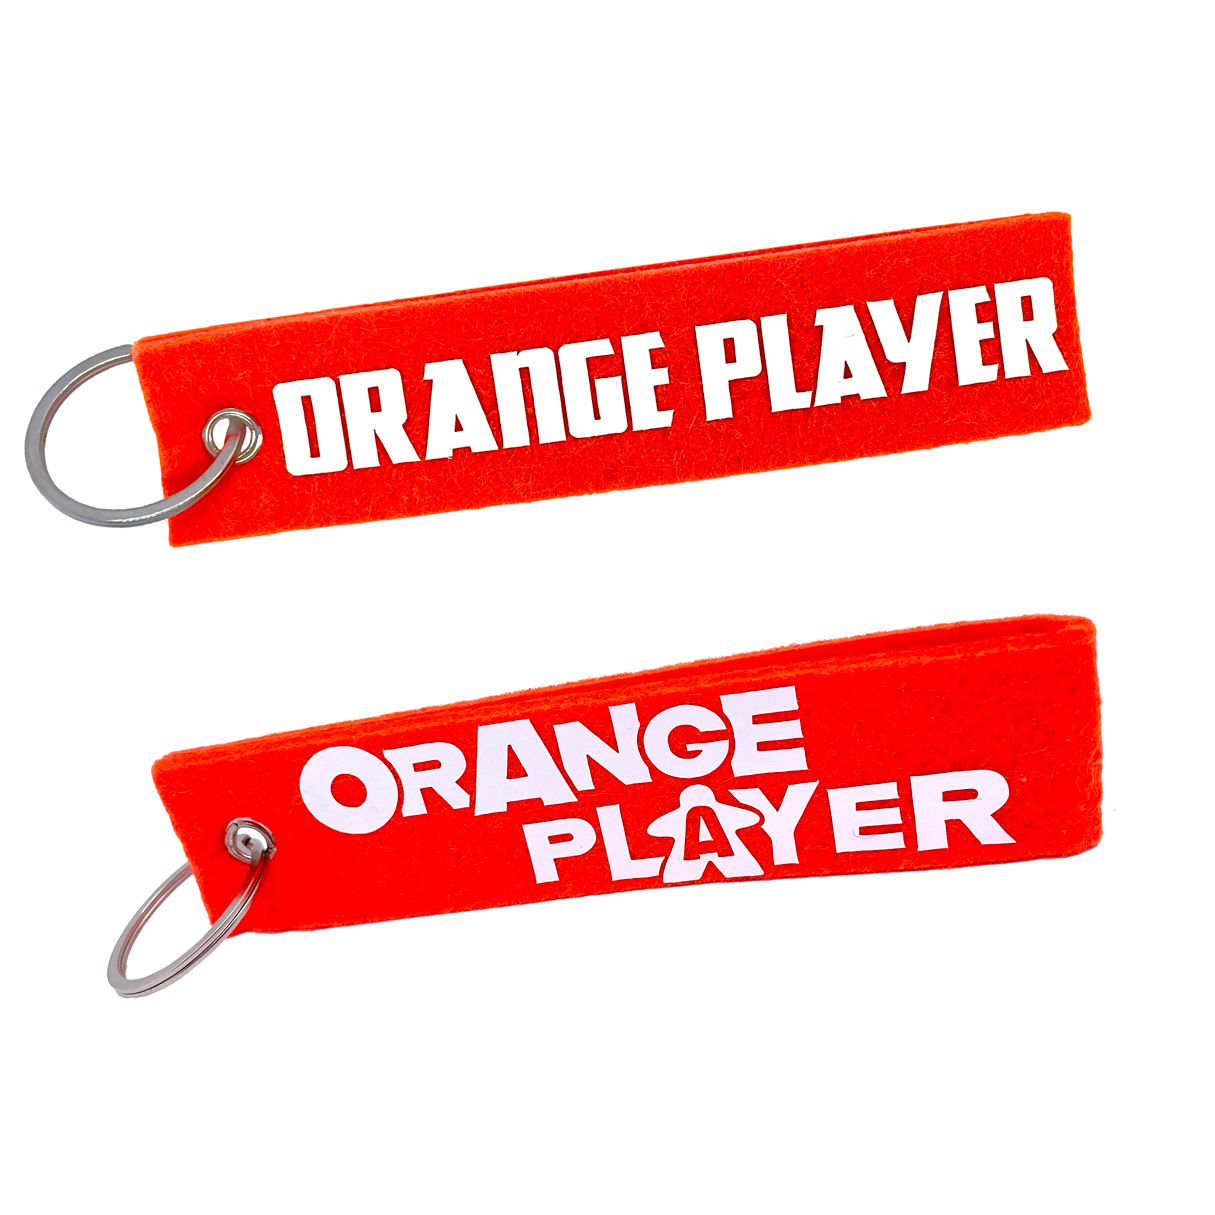 Key ring felt - Orange Player - player color orange